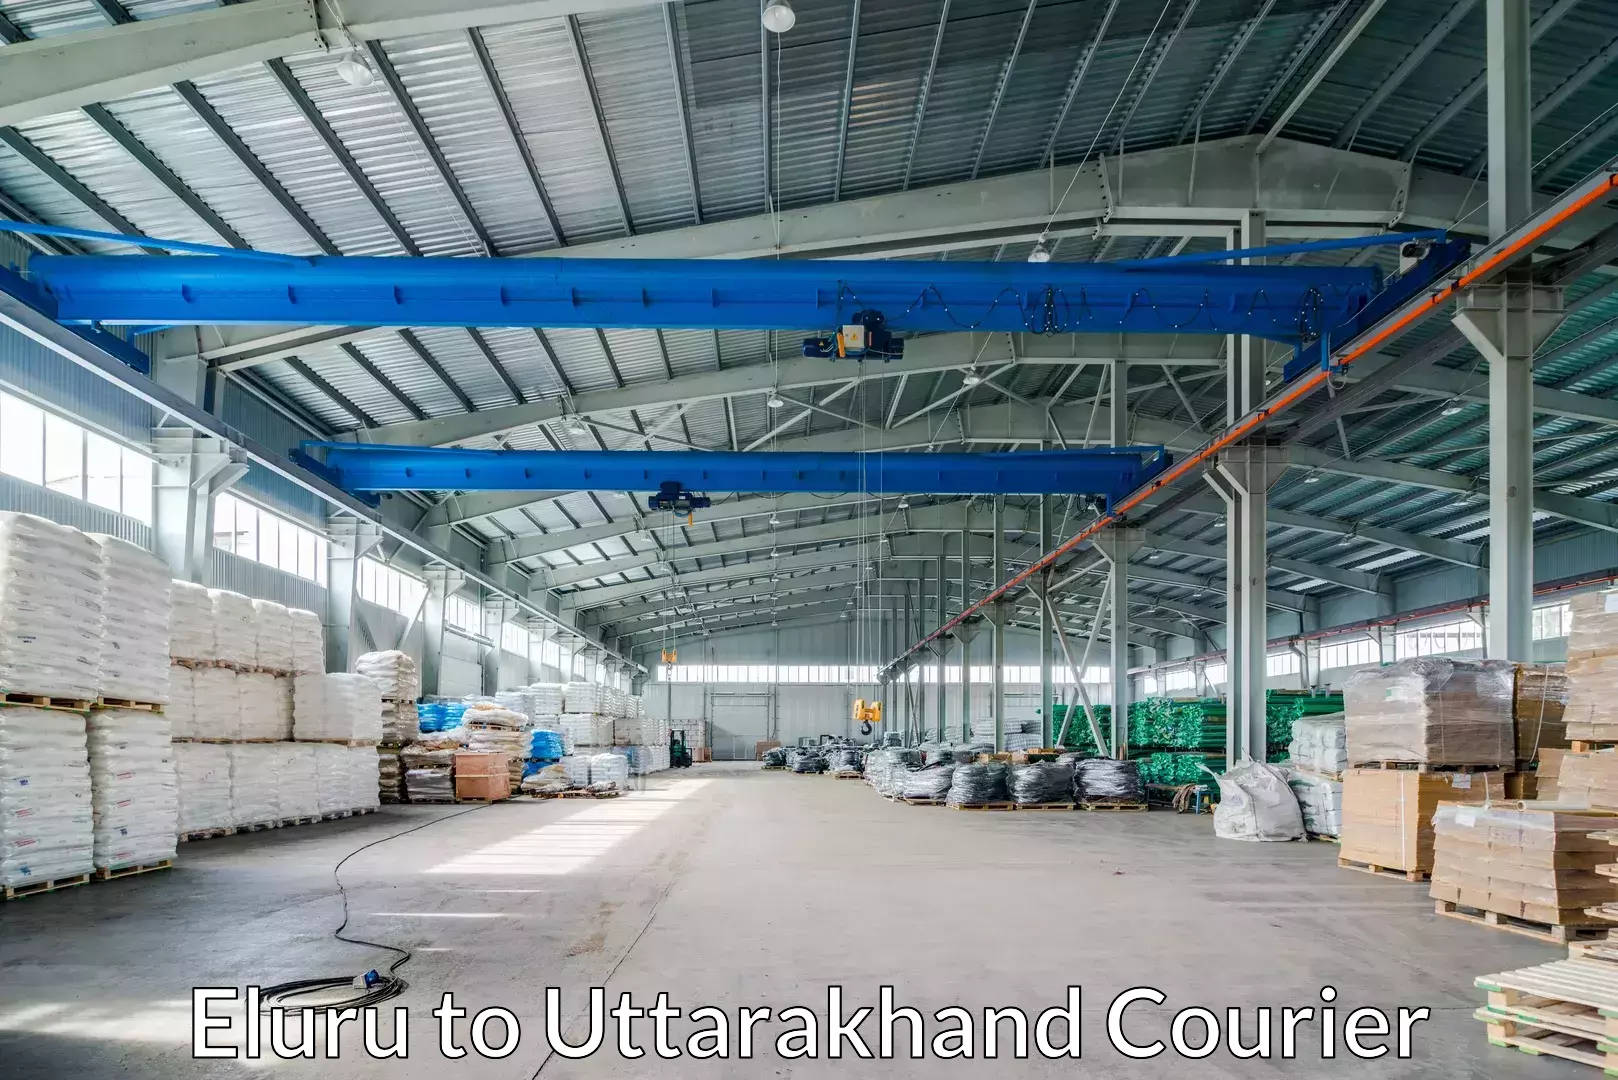 Quality moving company in Eluru to Uttarakhand